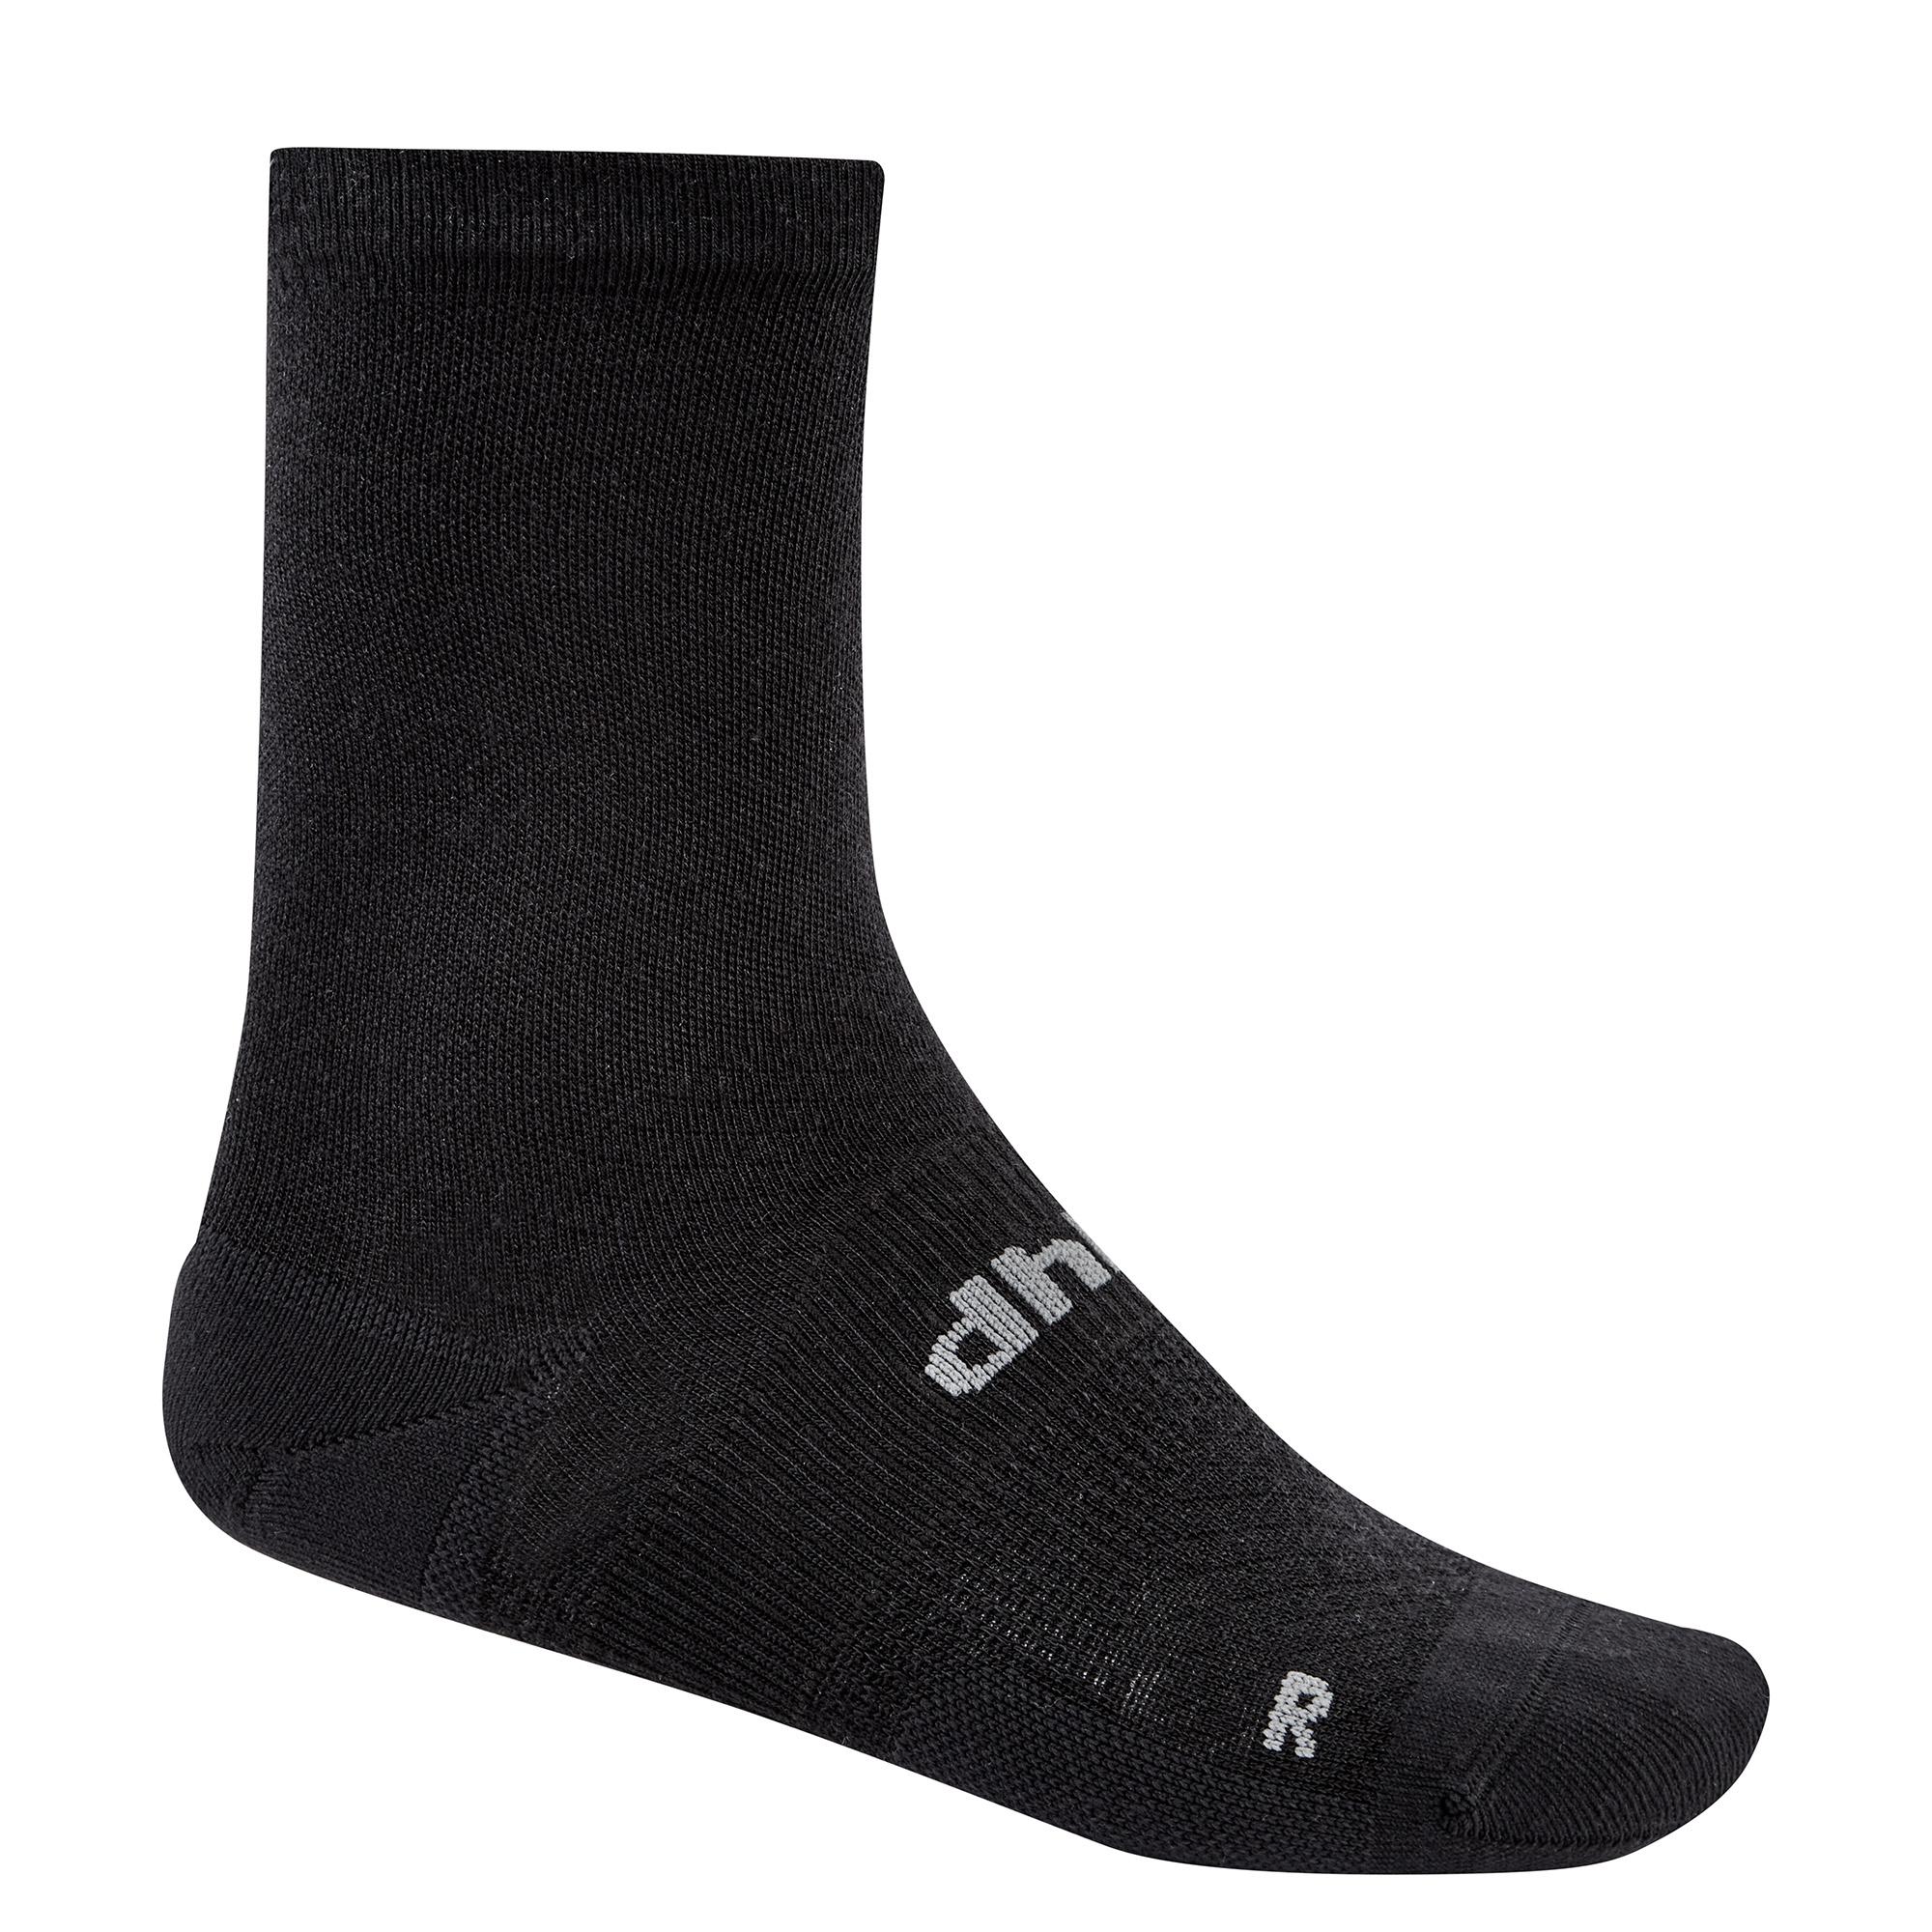 Dhb Aeron Ultra Socks - Black